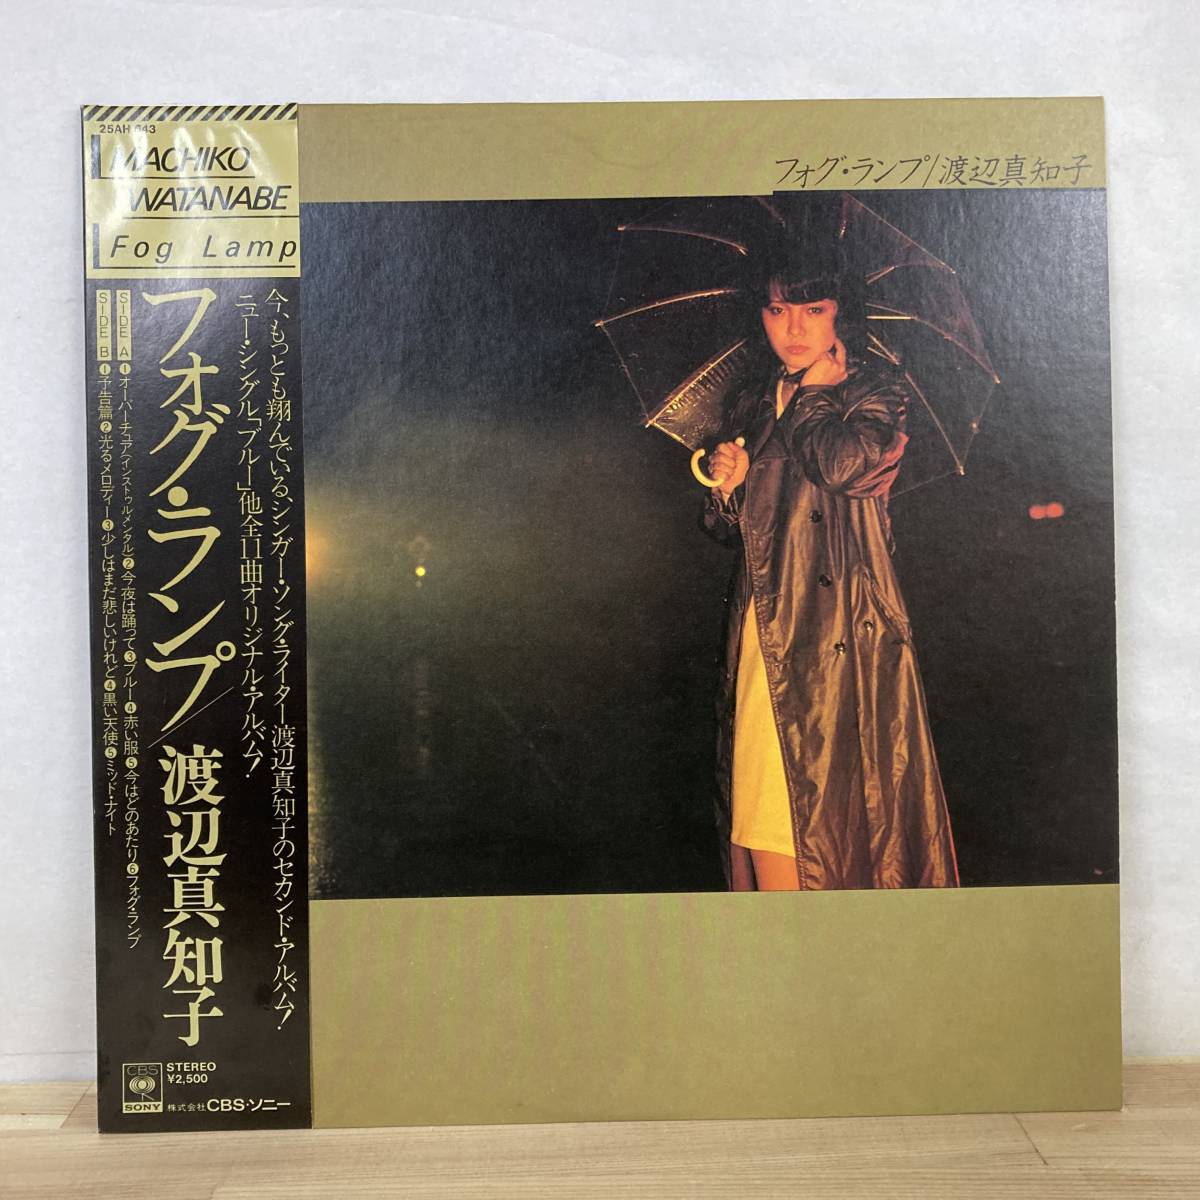 g30#[ domestic record /LP/ set ] Watanabe Machiko summarize 4 pieces set * sea ......./ foglamp * lamp / memory z/ Live la210907